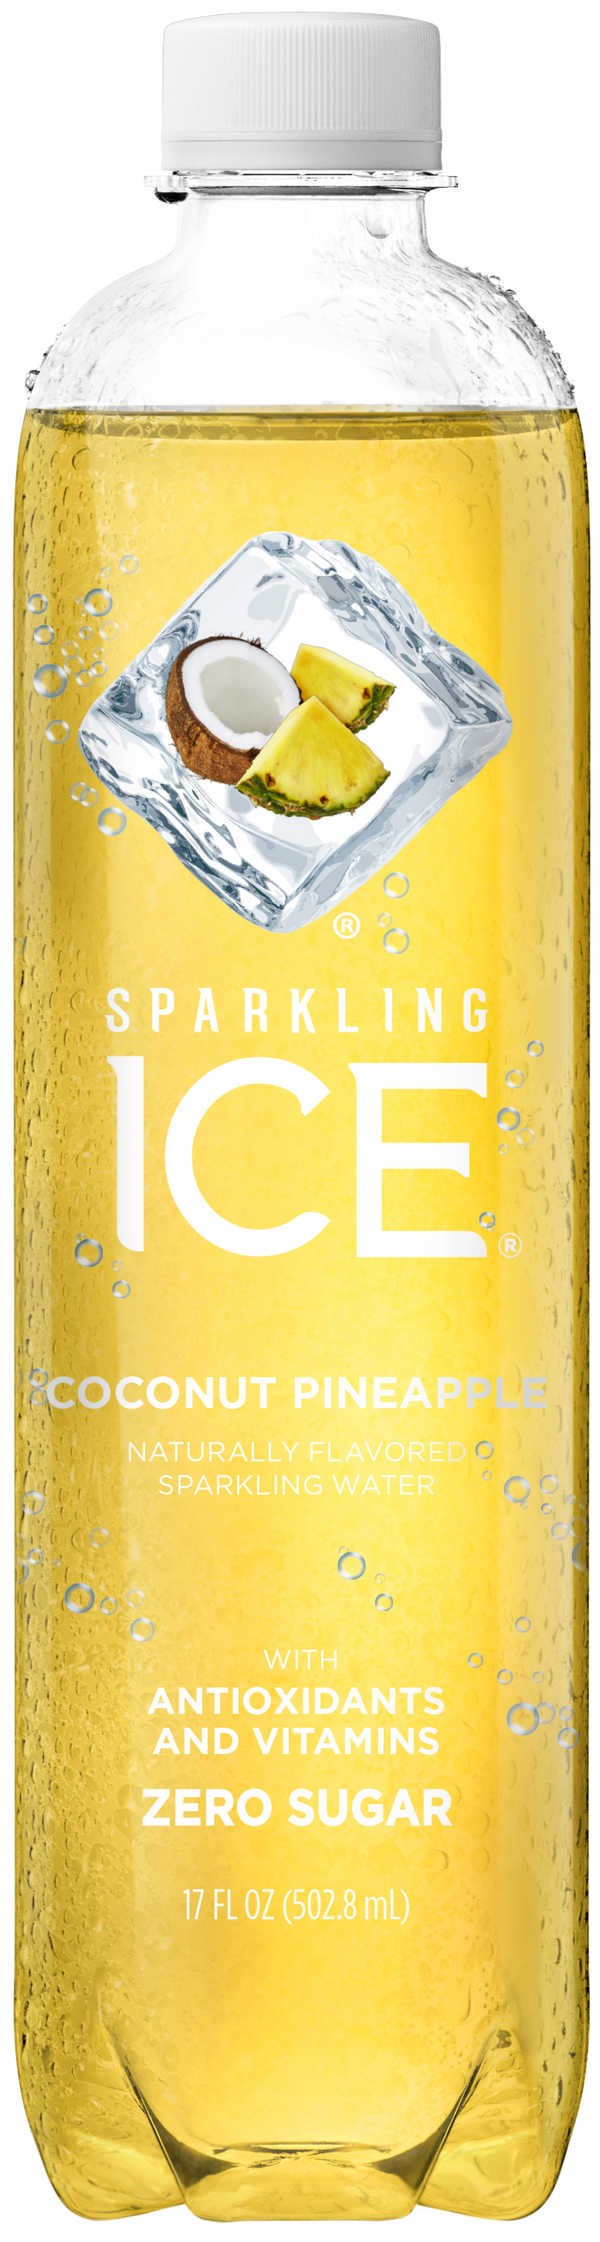 Sparkling Ice Coconut Pineapple, 12/502ml